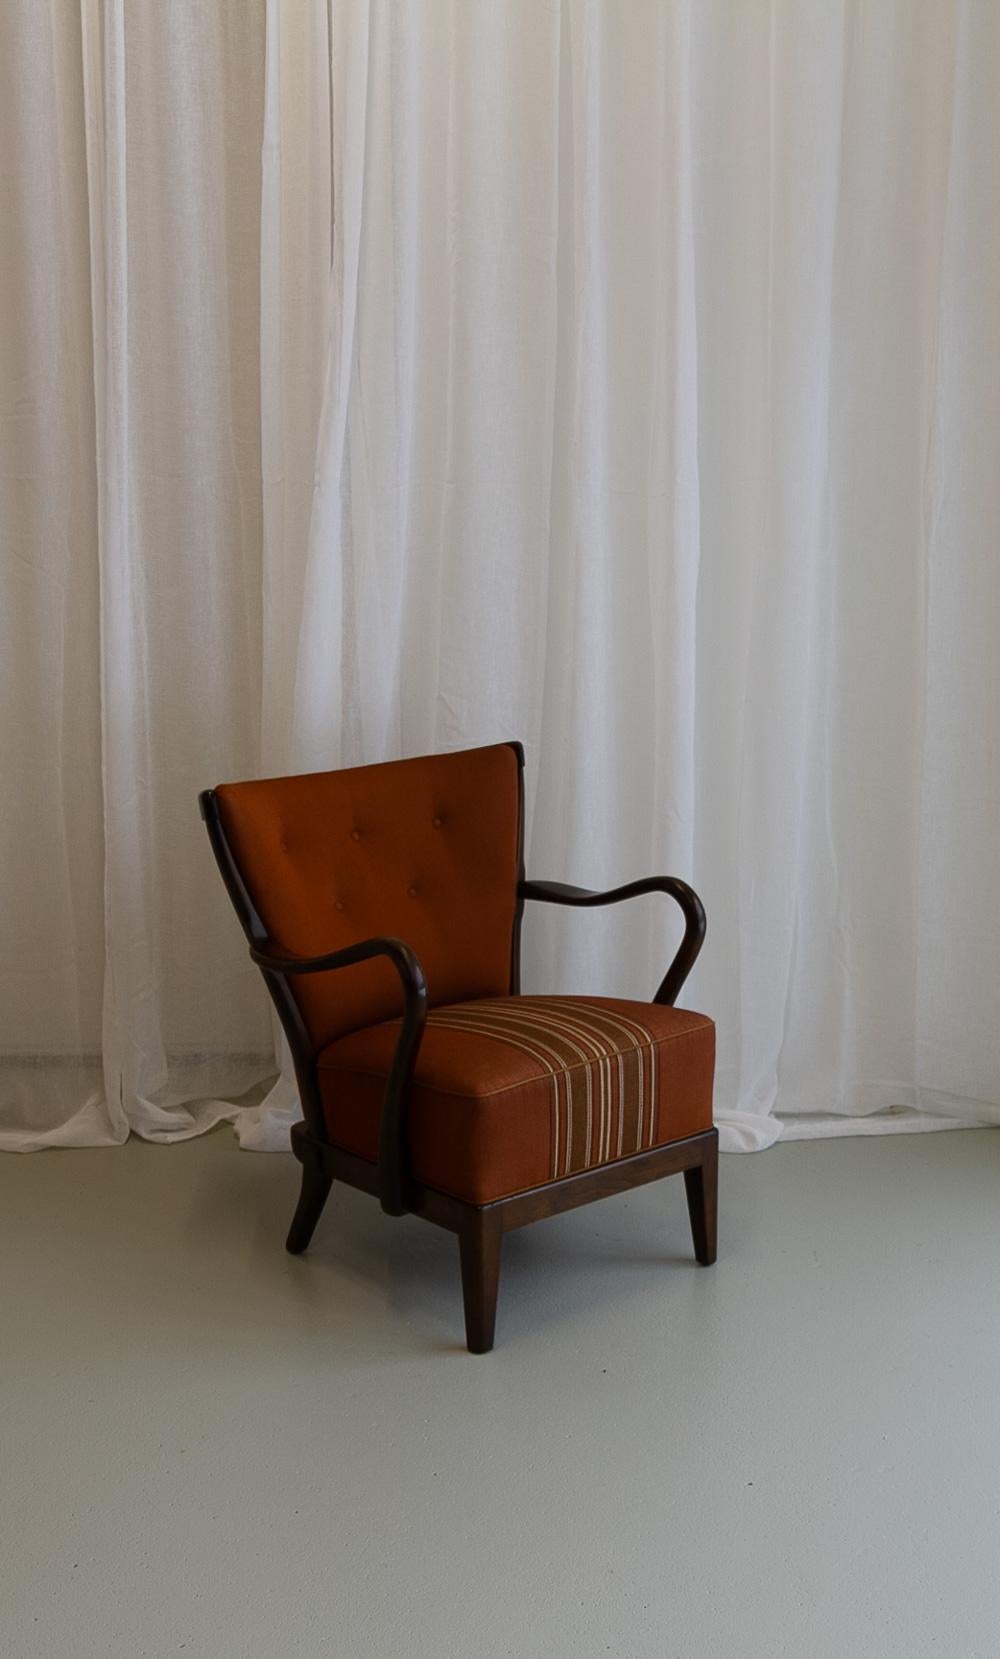 Mid-20th Century Danish Modern Lounge Chair by Alfred Christensen for Slagelse Møbelværk, 1940s.